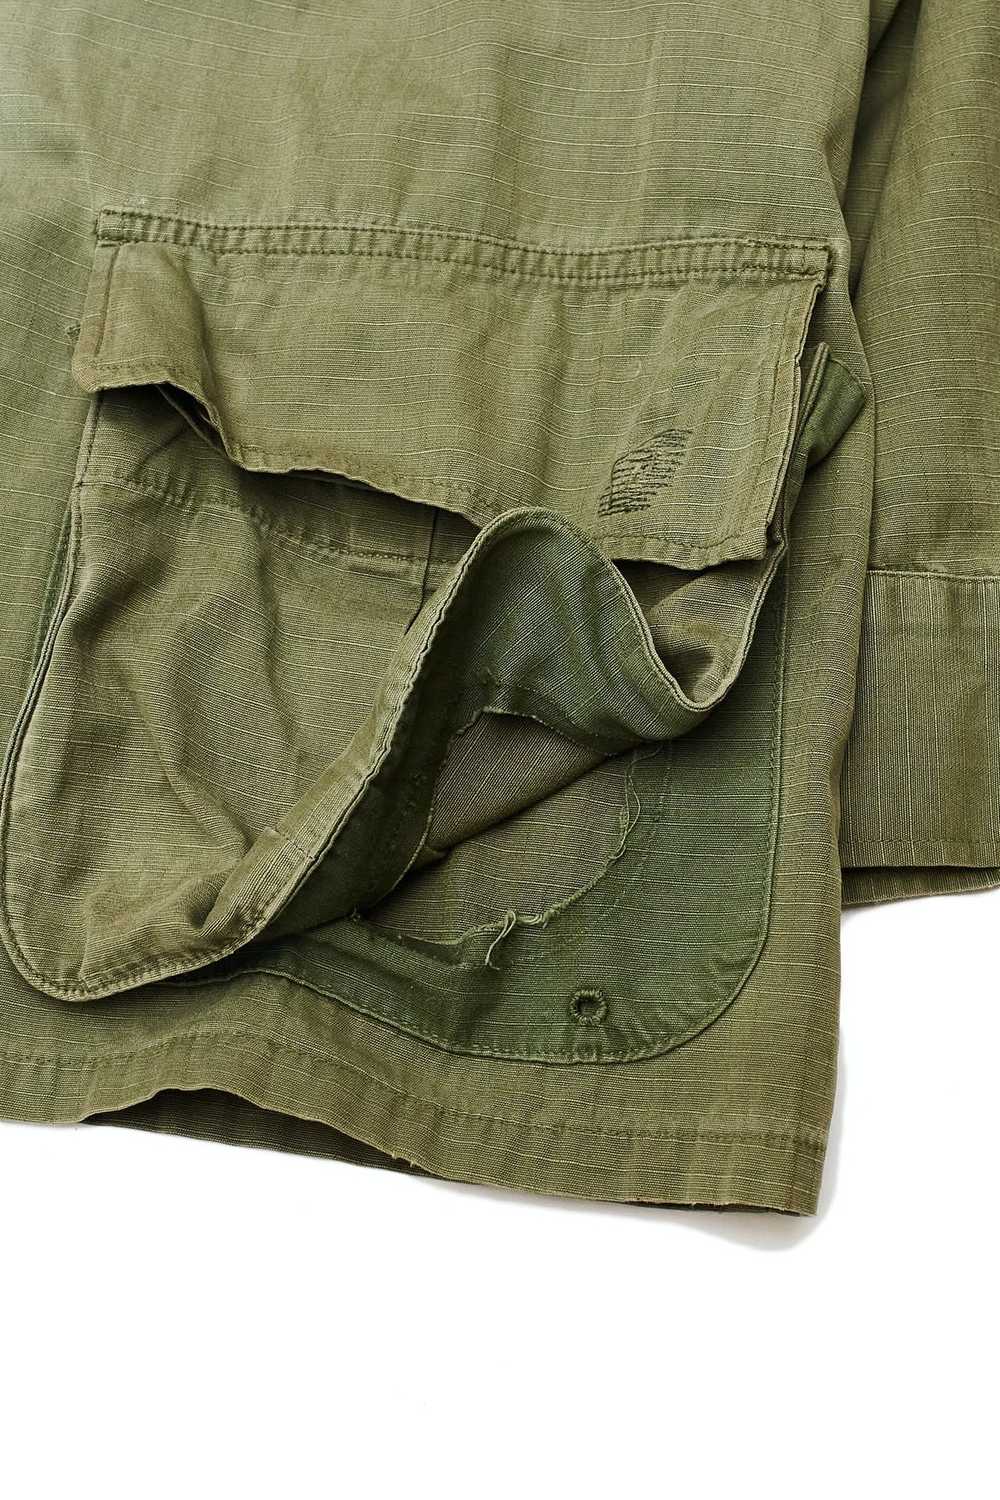 Military 70's Jungle Jacket - image 5